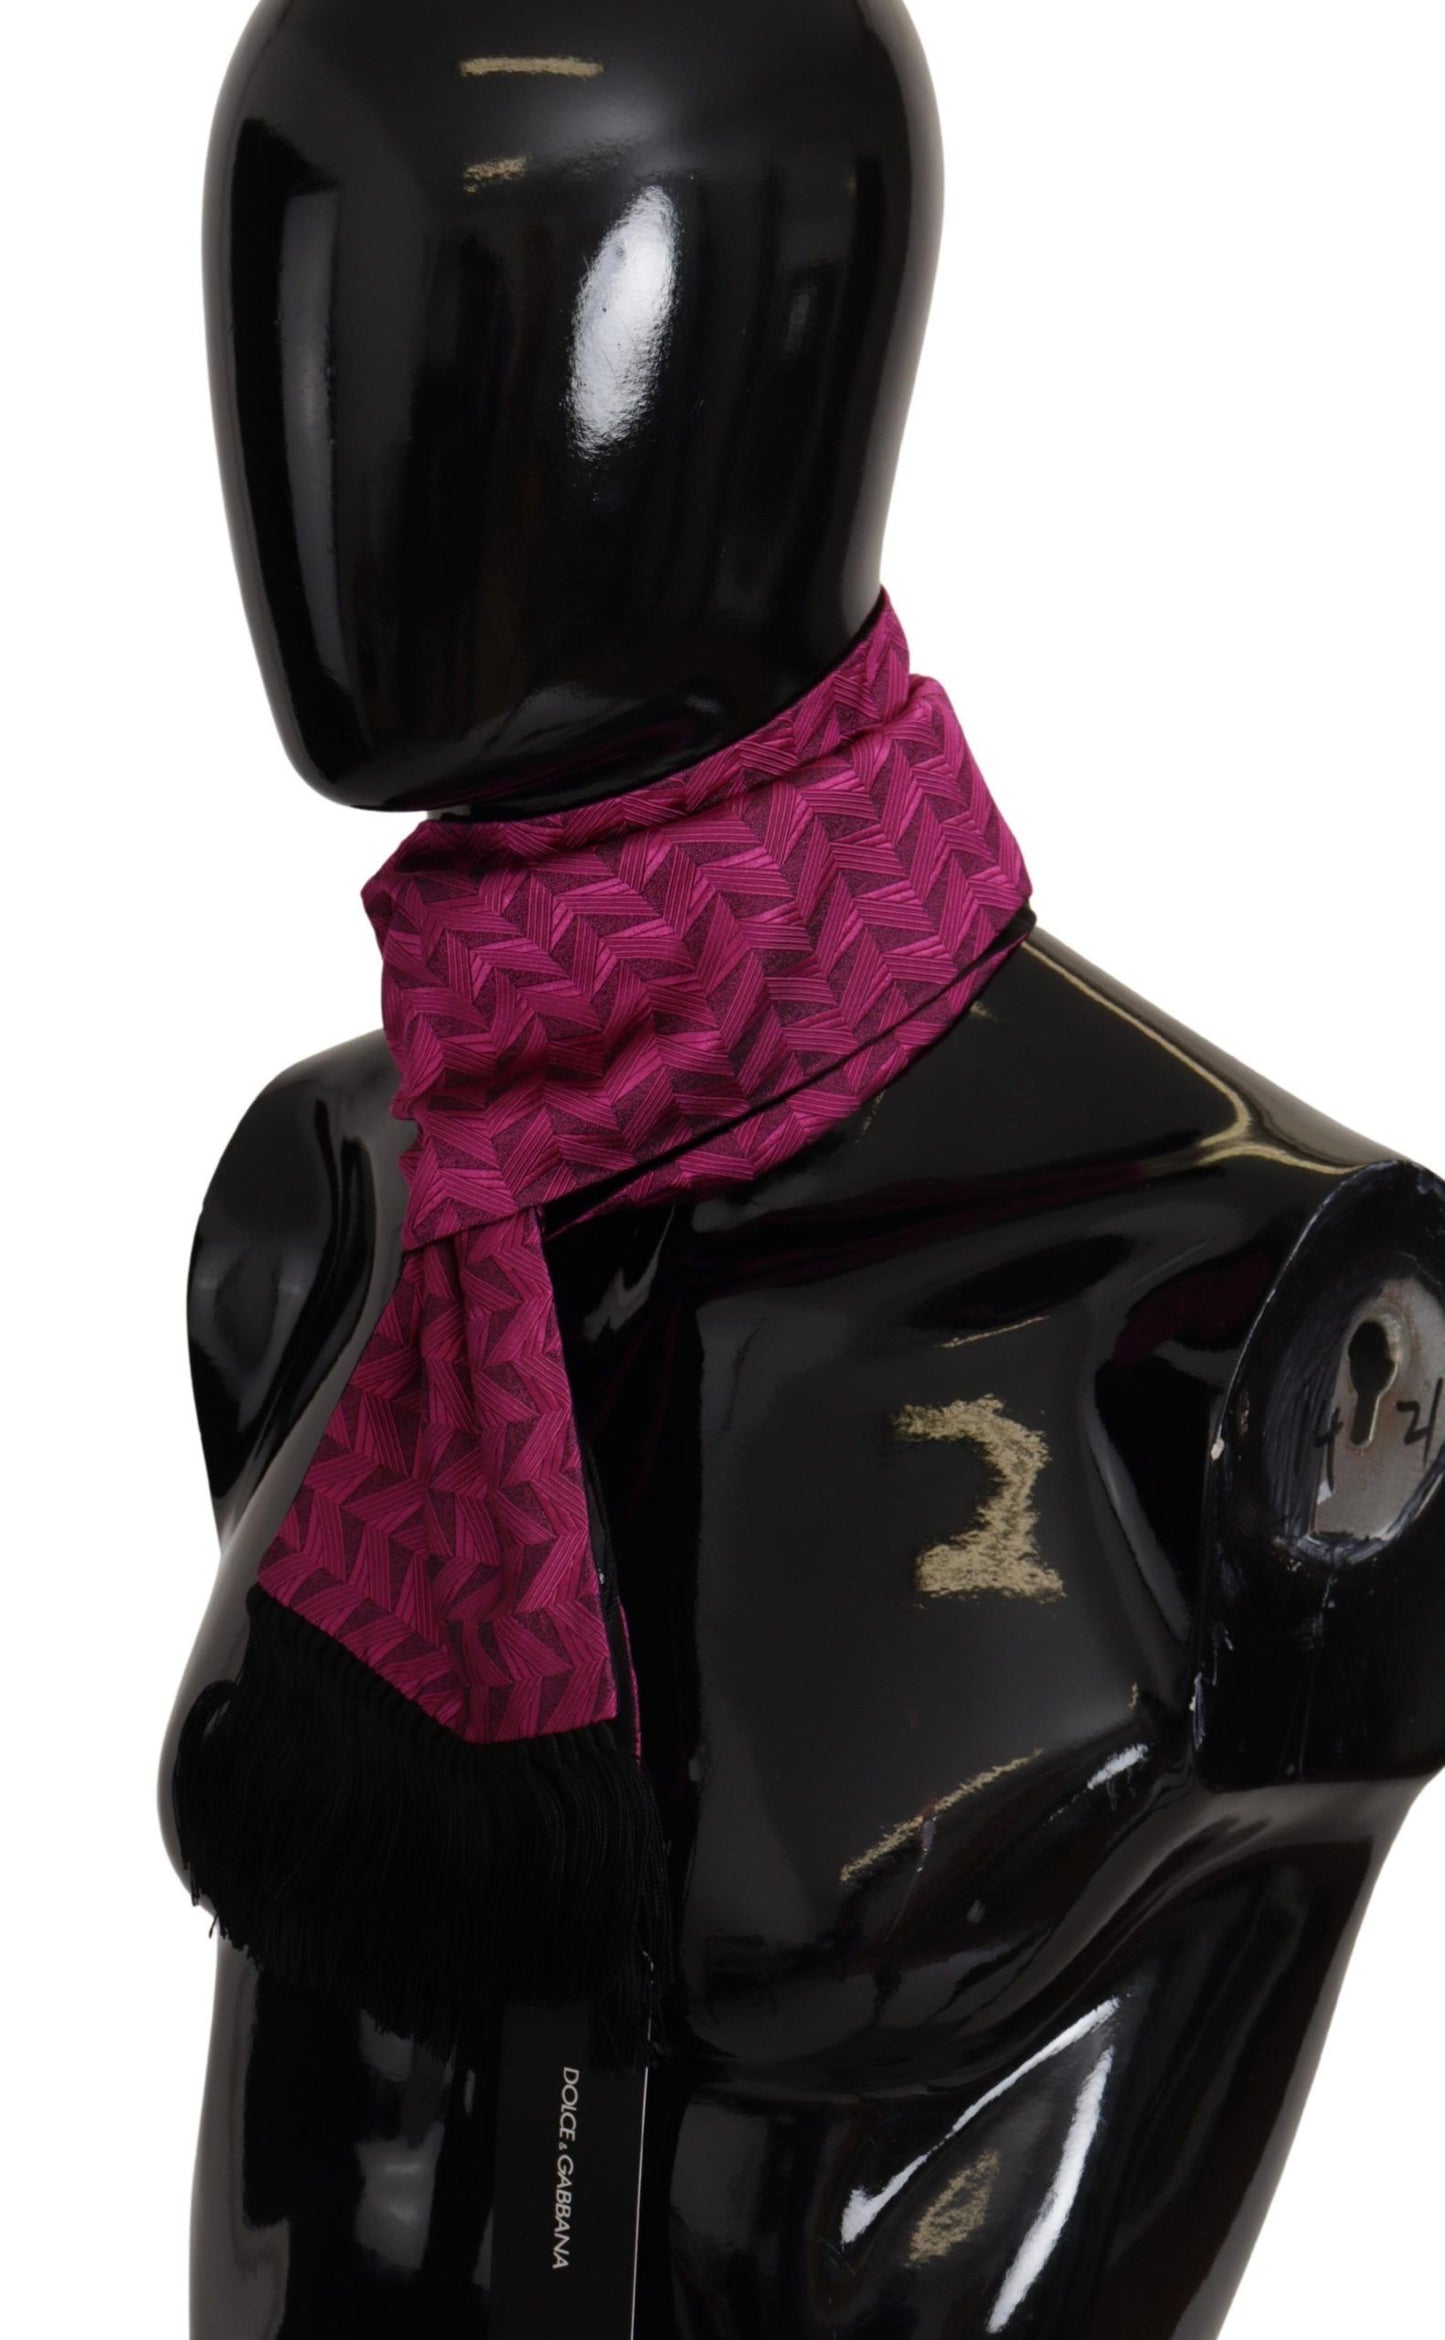 Dolce & Gabbana magenta geometrica a scialle di scialle di seta frangia